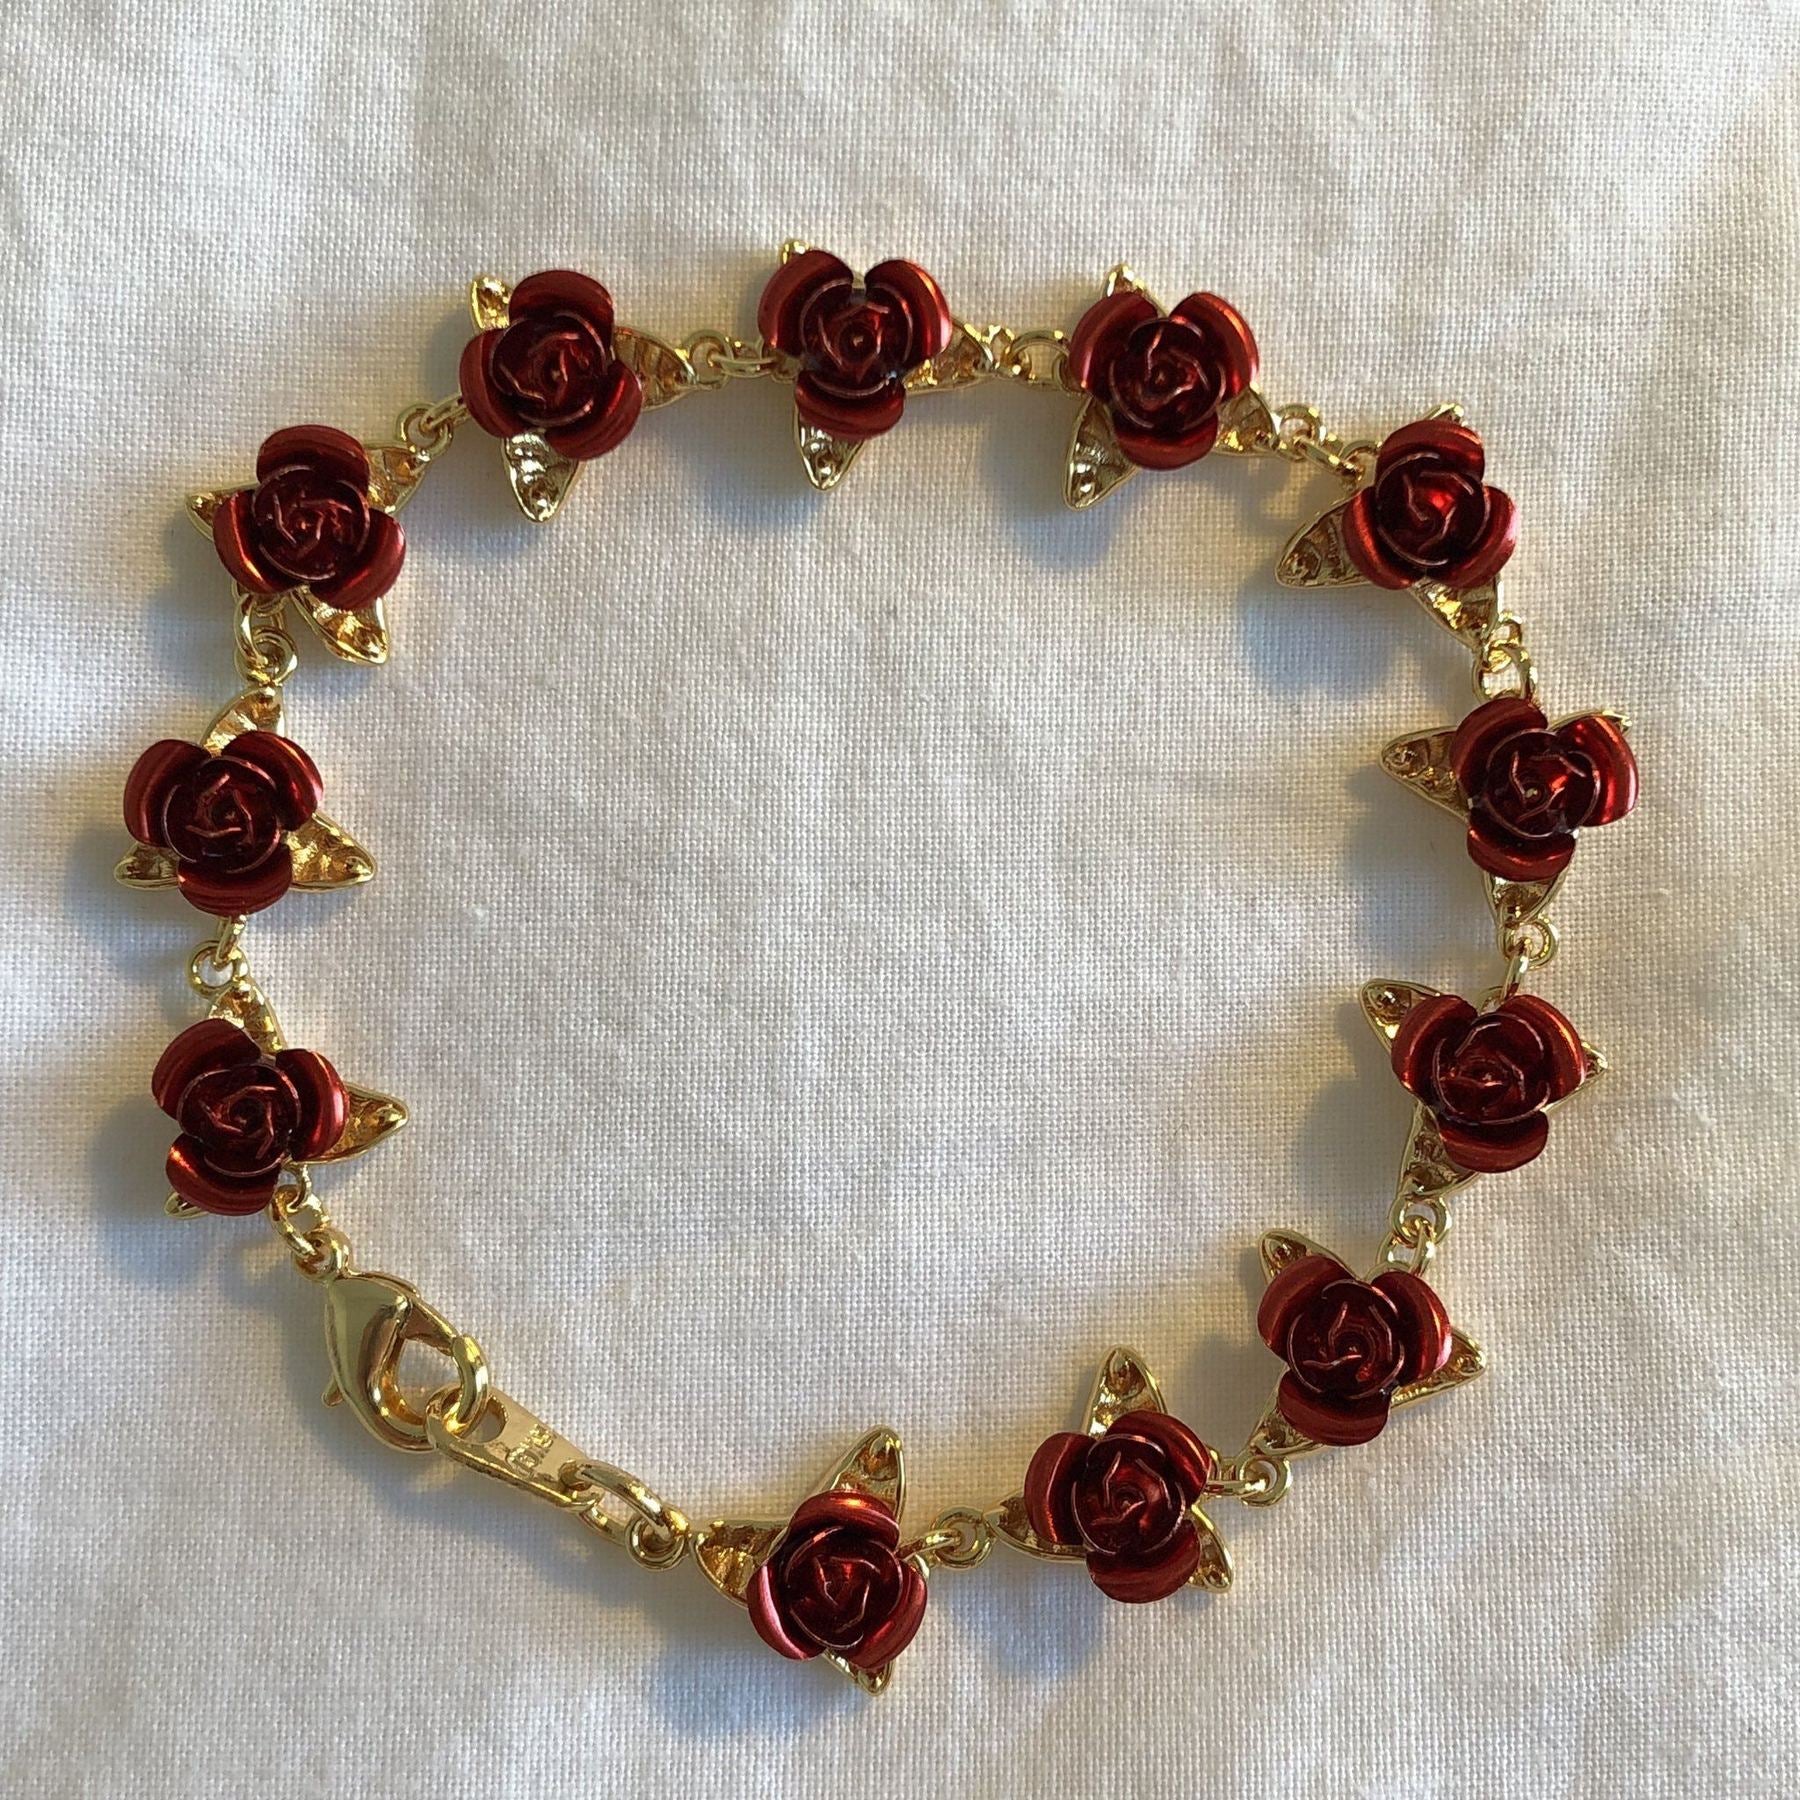 A Dozen Roses Bracelet